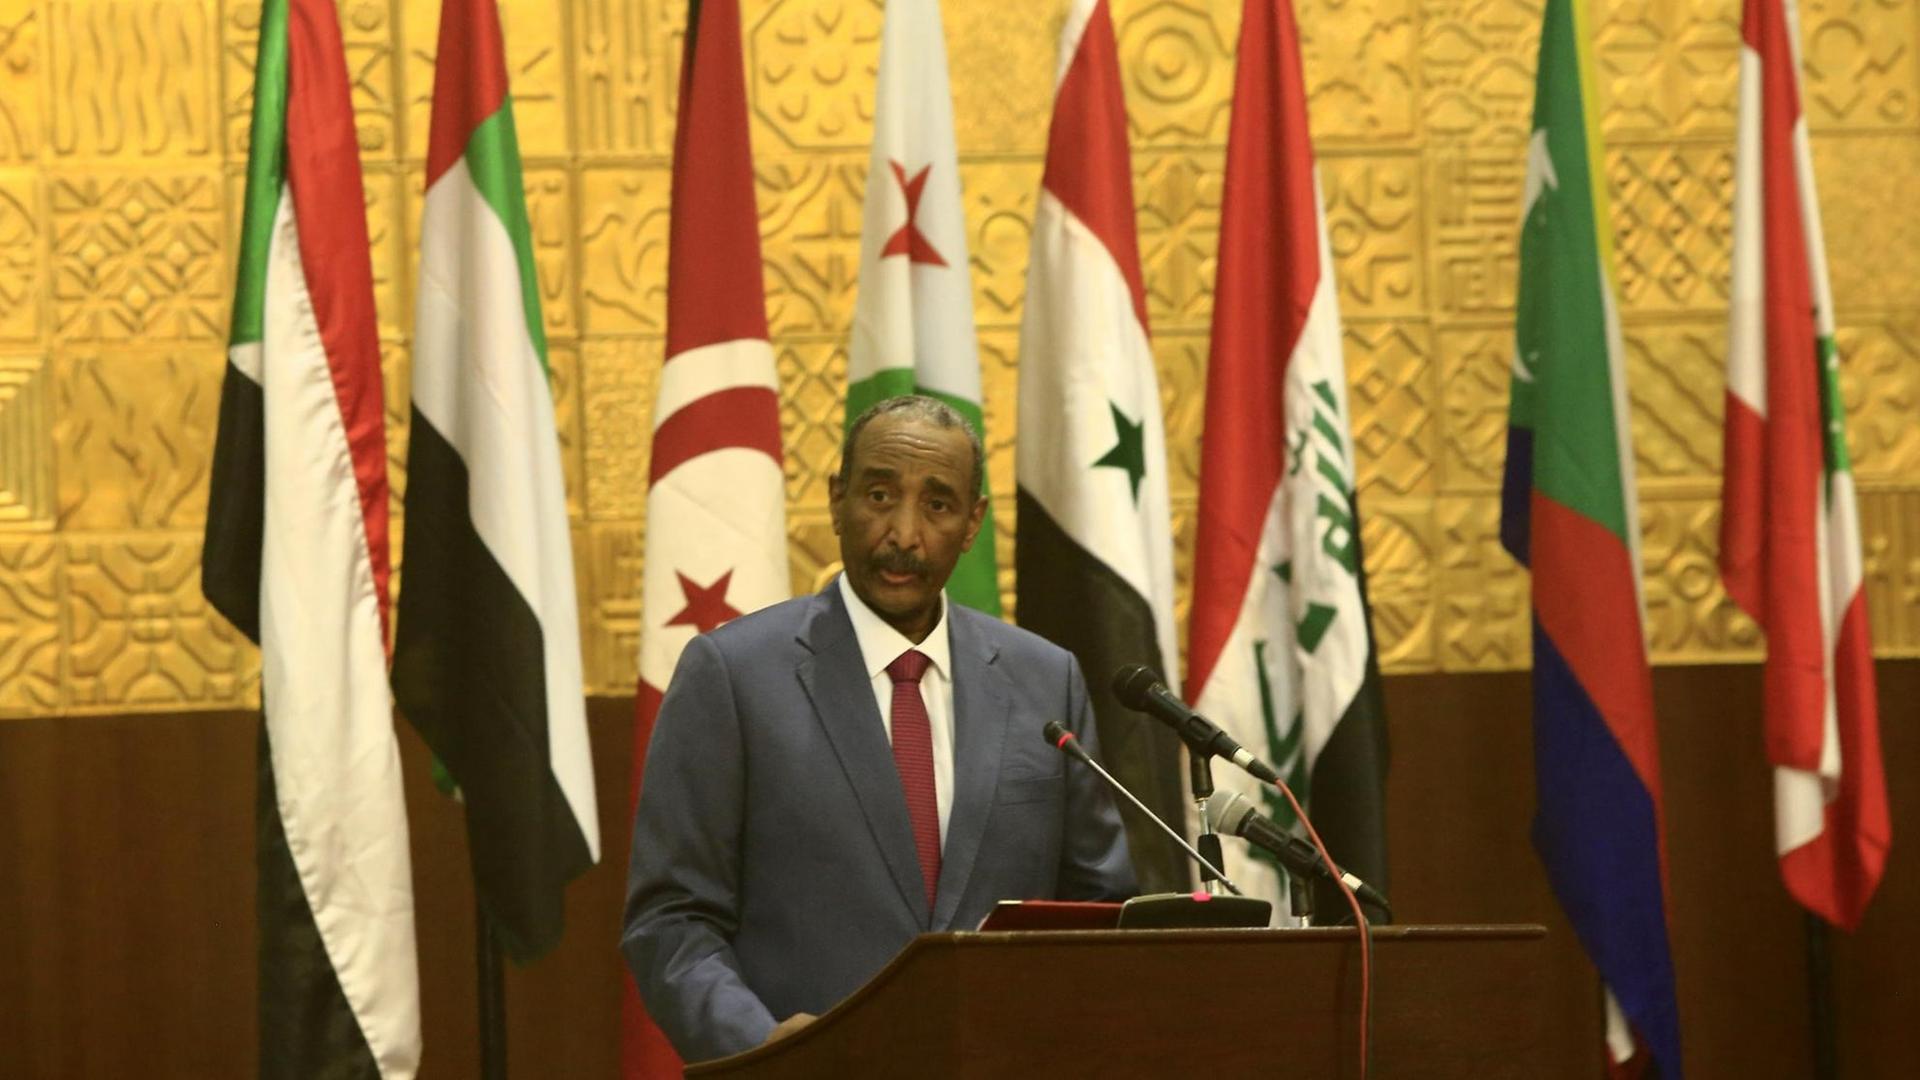 General Abdel Fattah al-Burhan am 12.12.2019 in Khartum